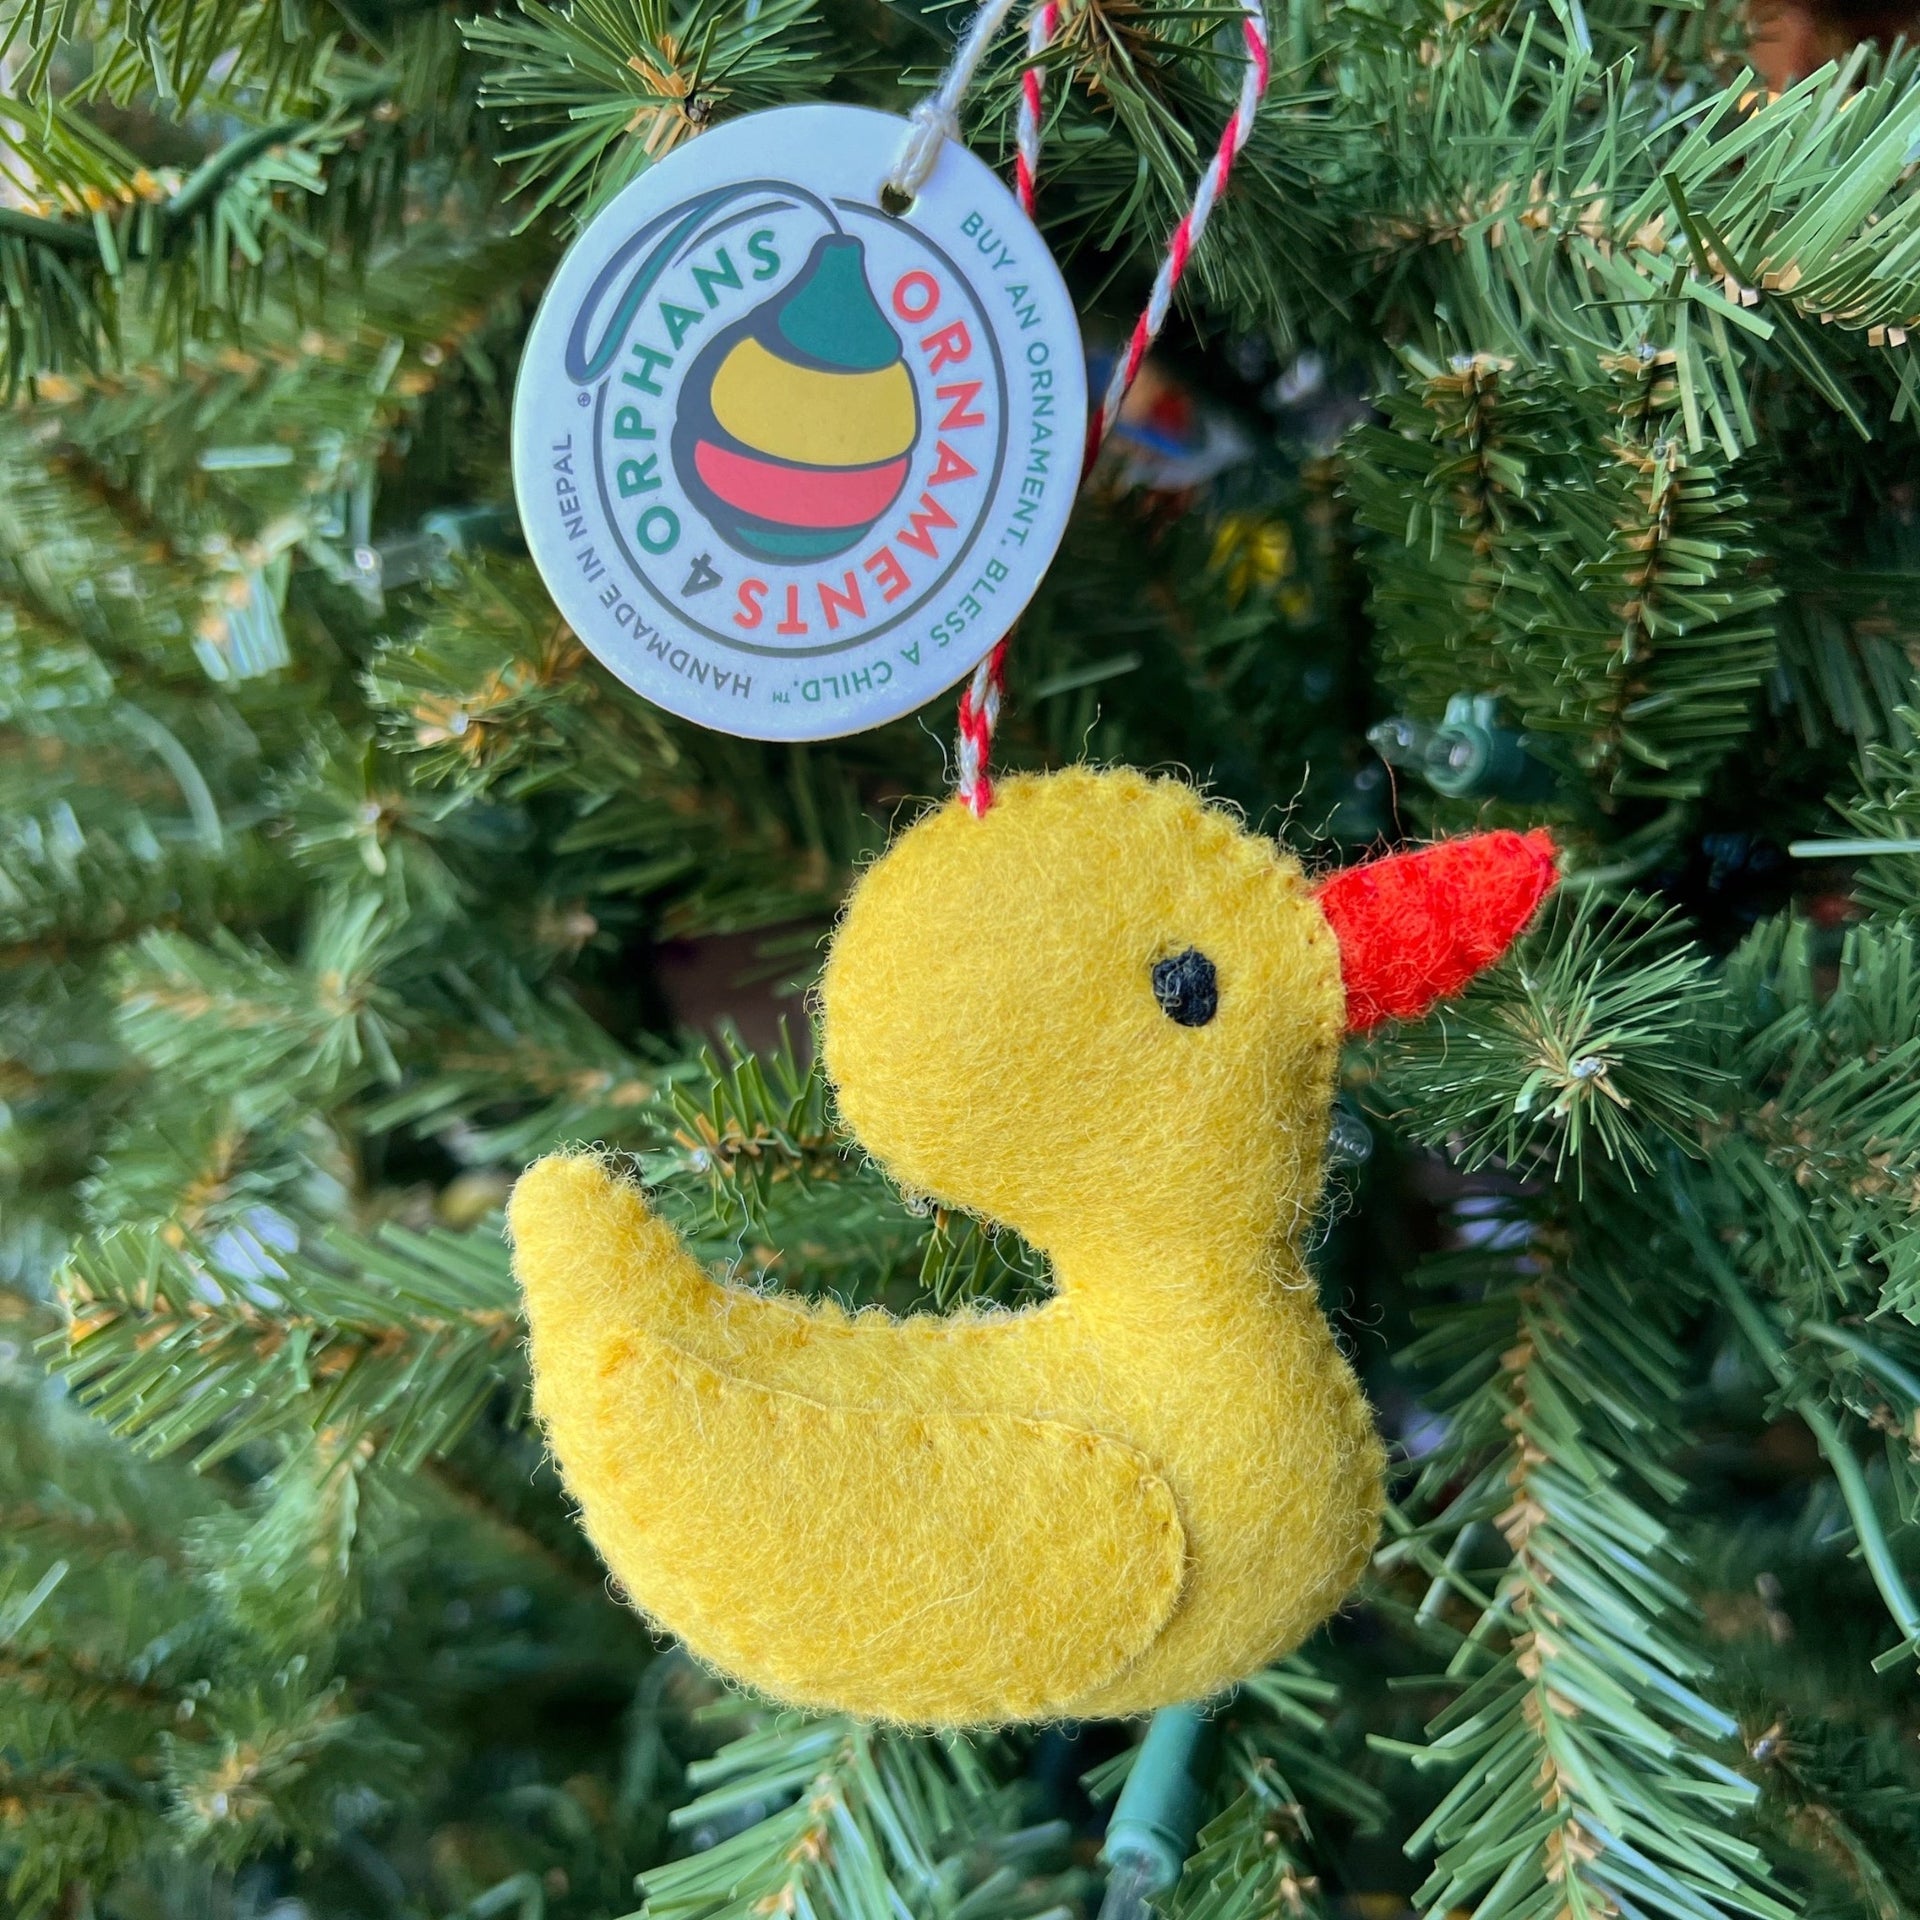 felt rubber duck ornament on Christmas tree